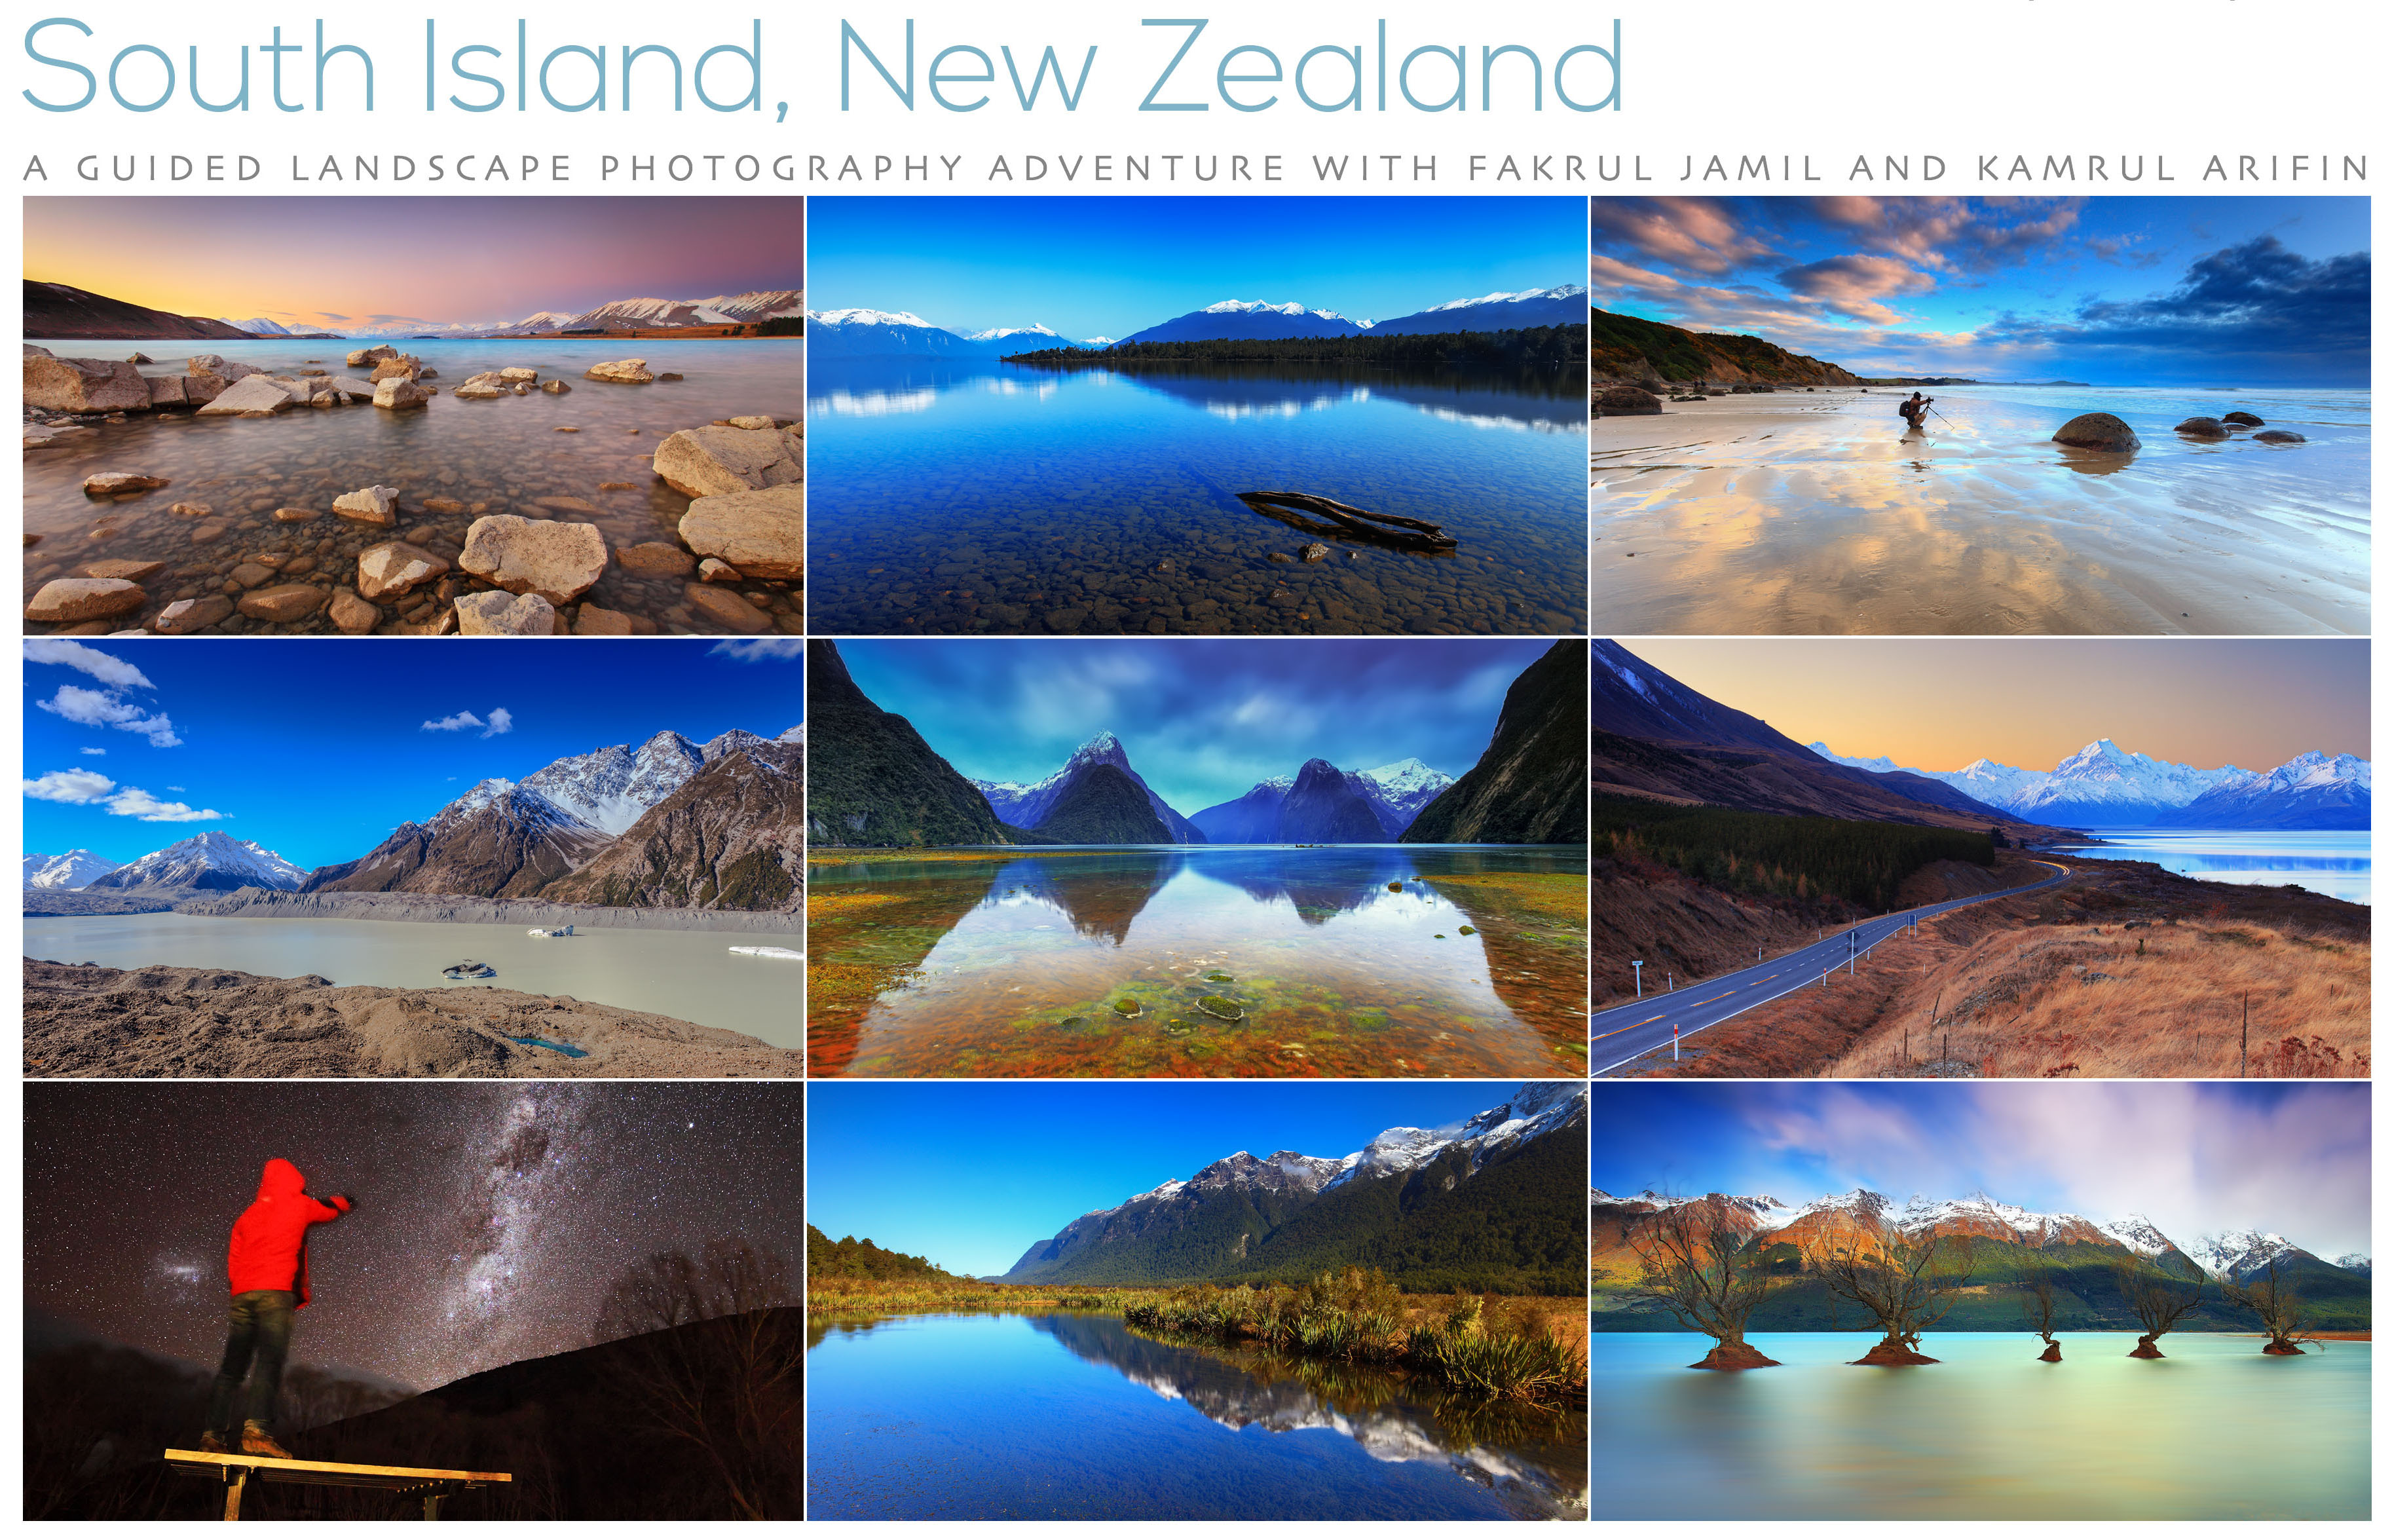 Landscape Photography Adventure to NZ